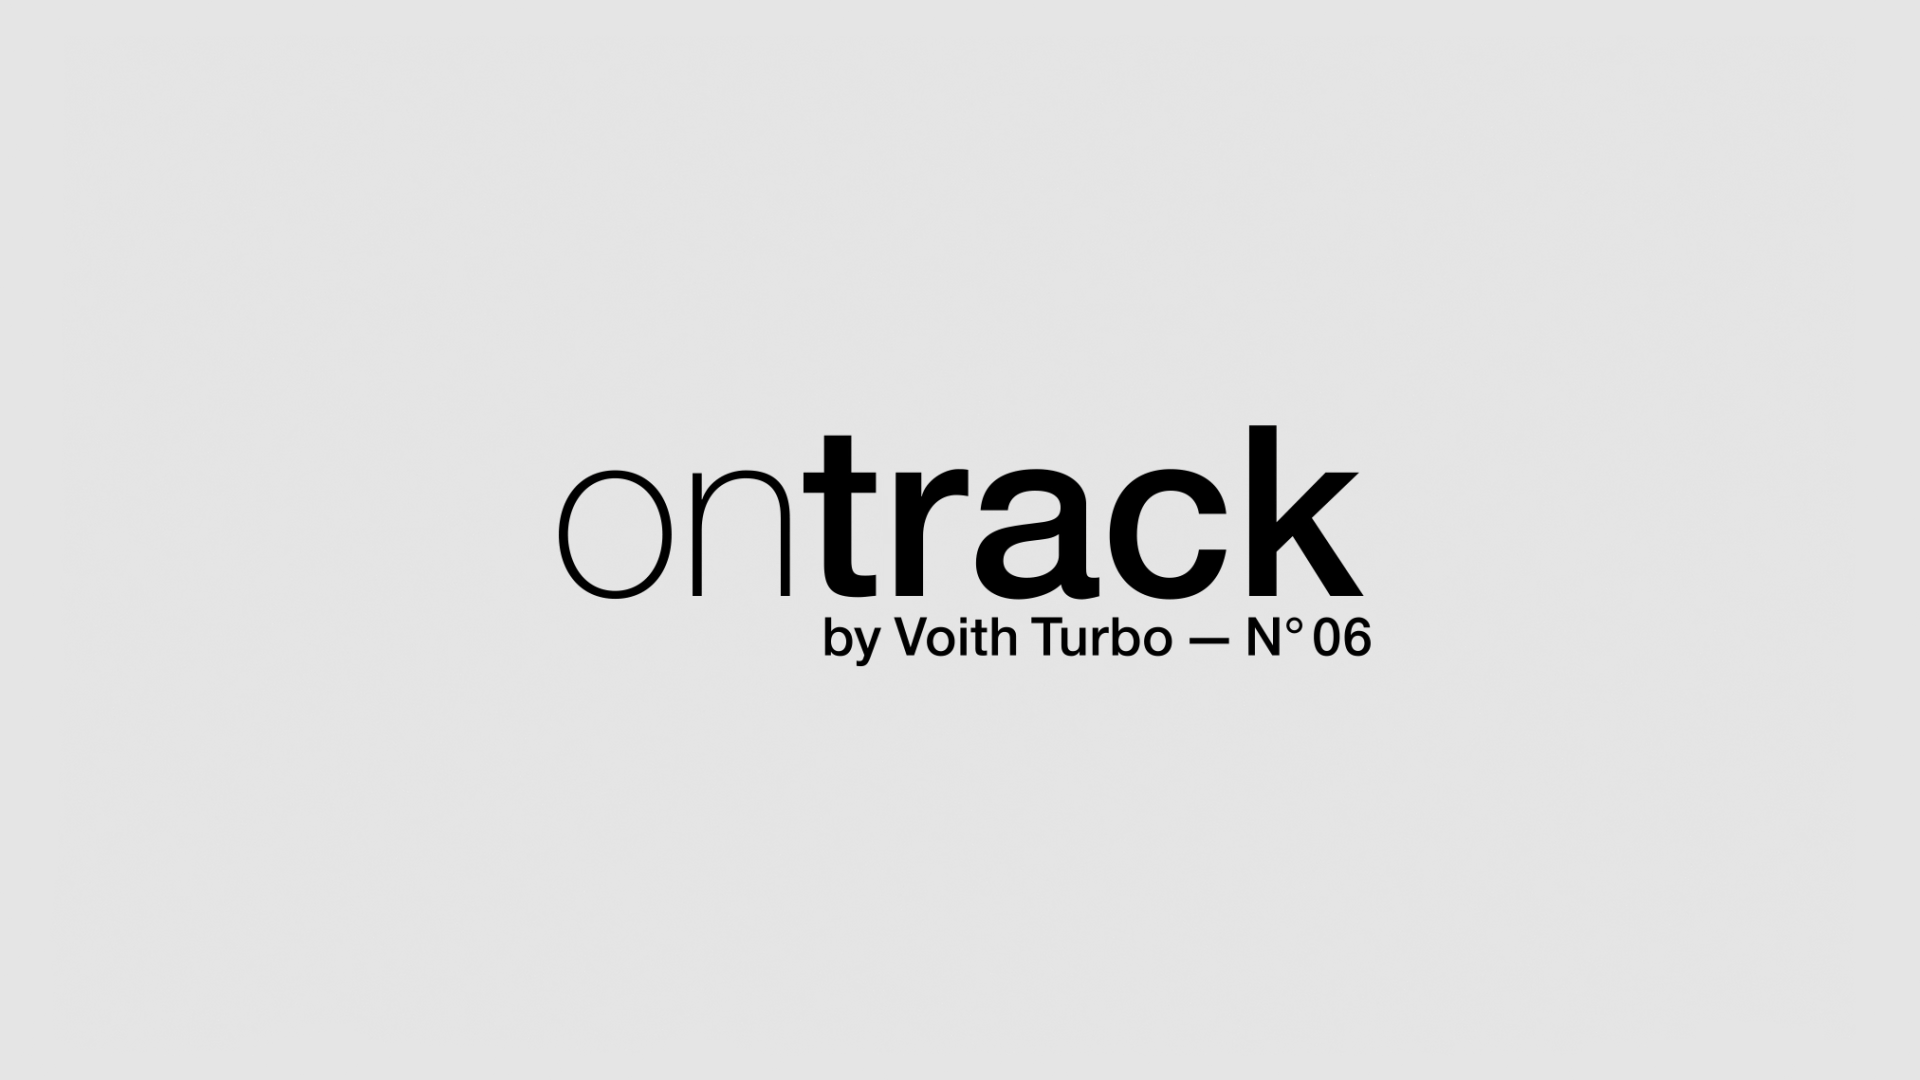 Voith Turbo customer magazine ontrack#6